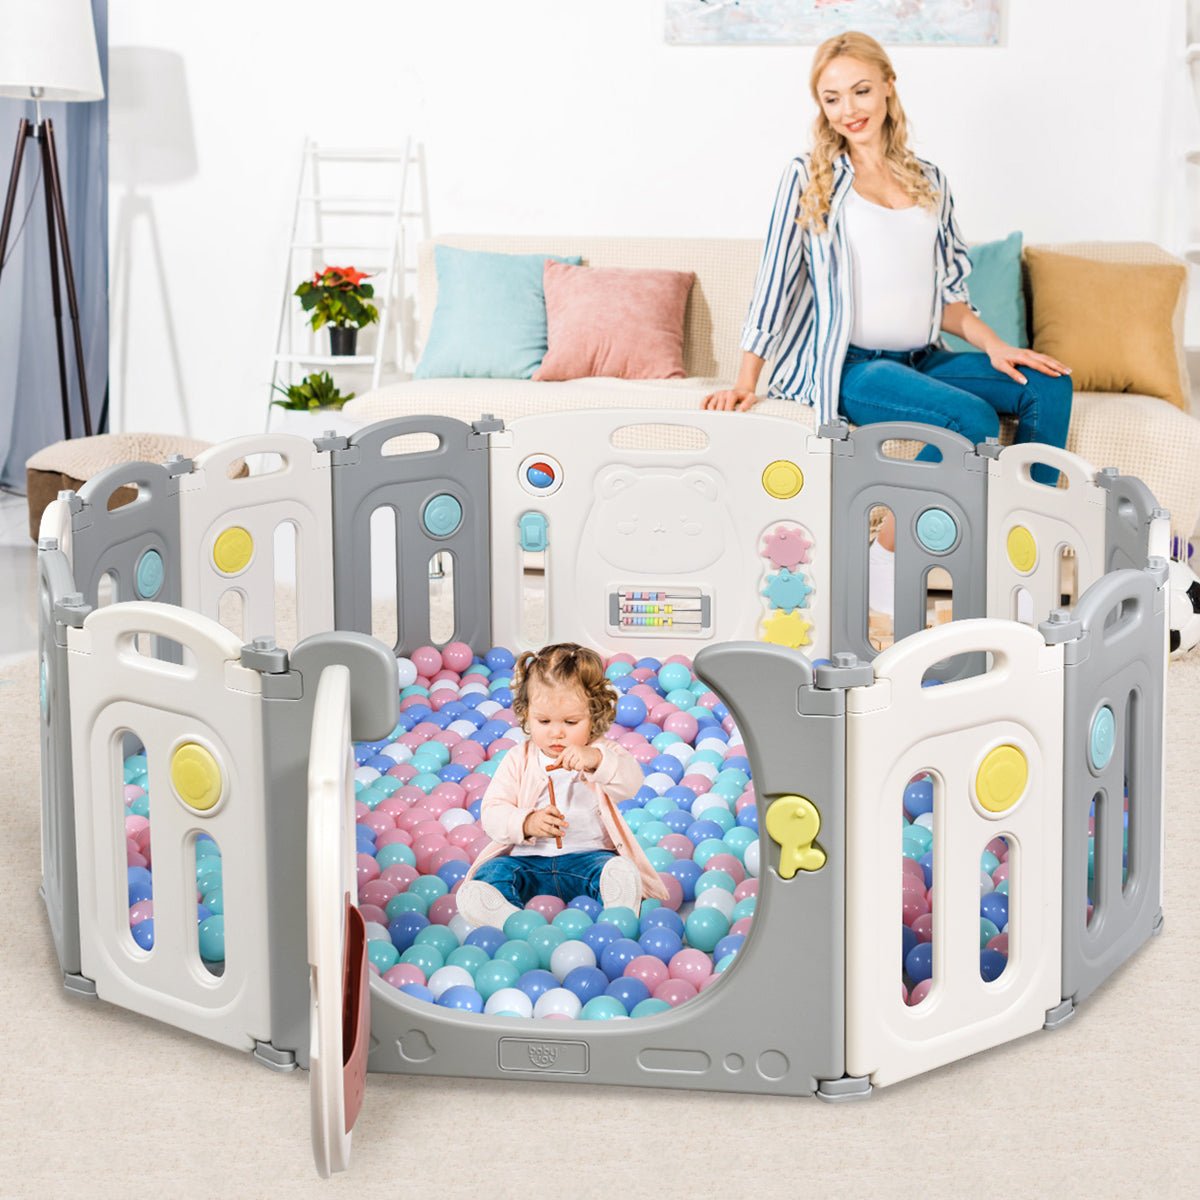 Secure Baby Play Area - Non-Slip Design